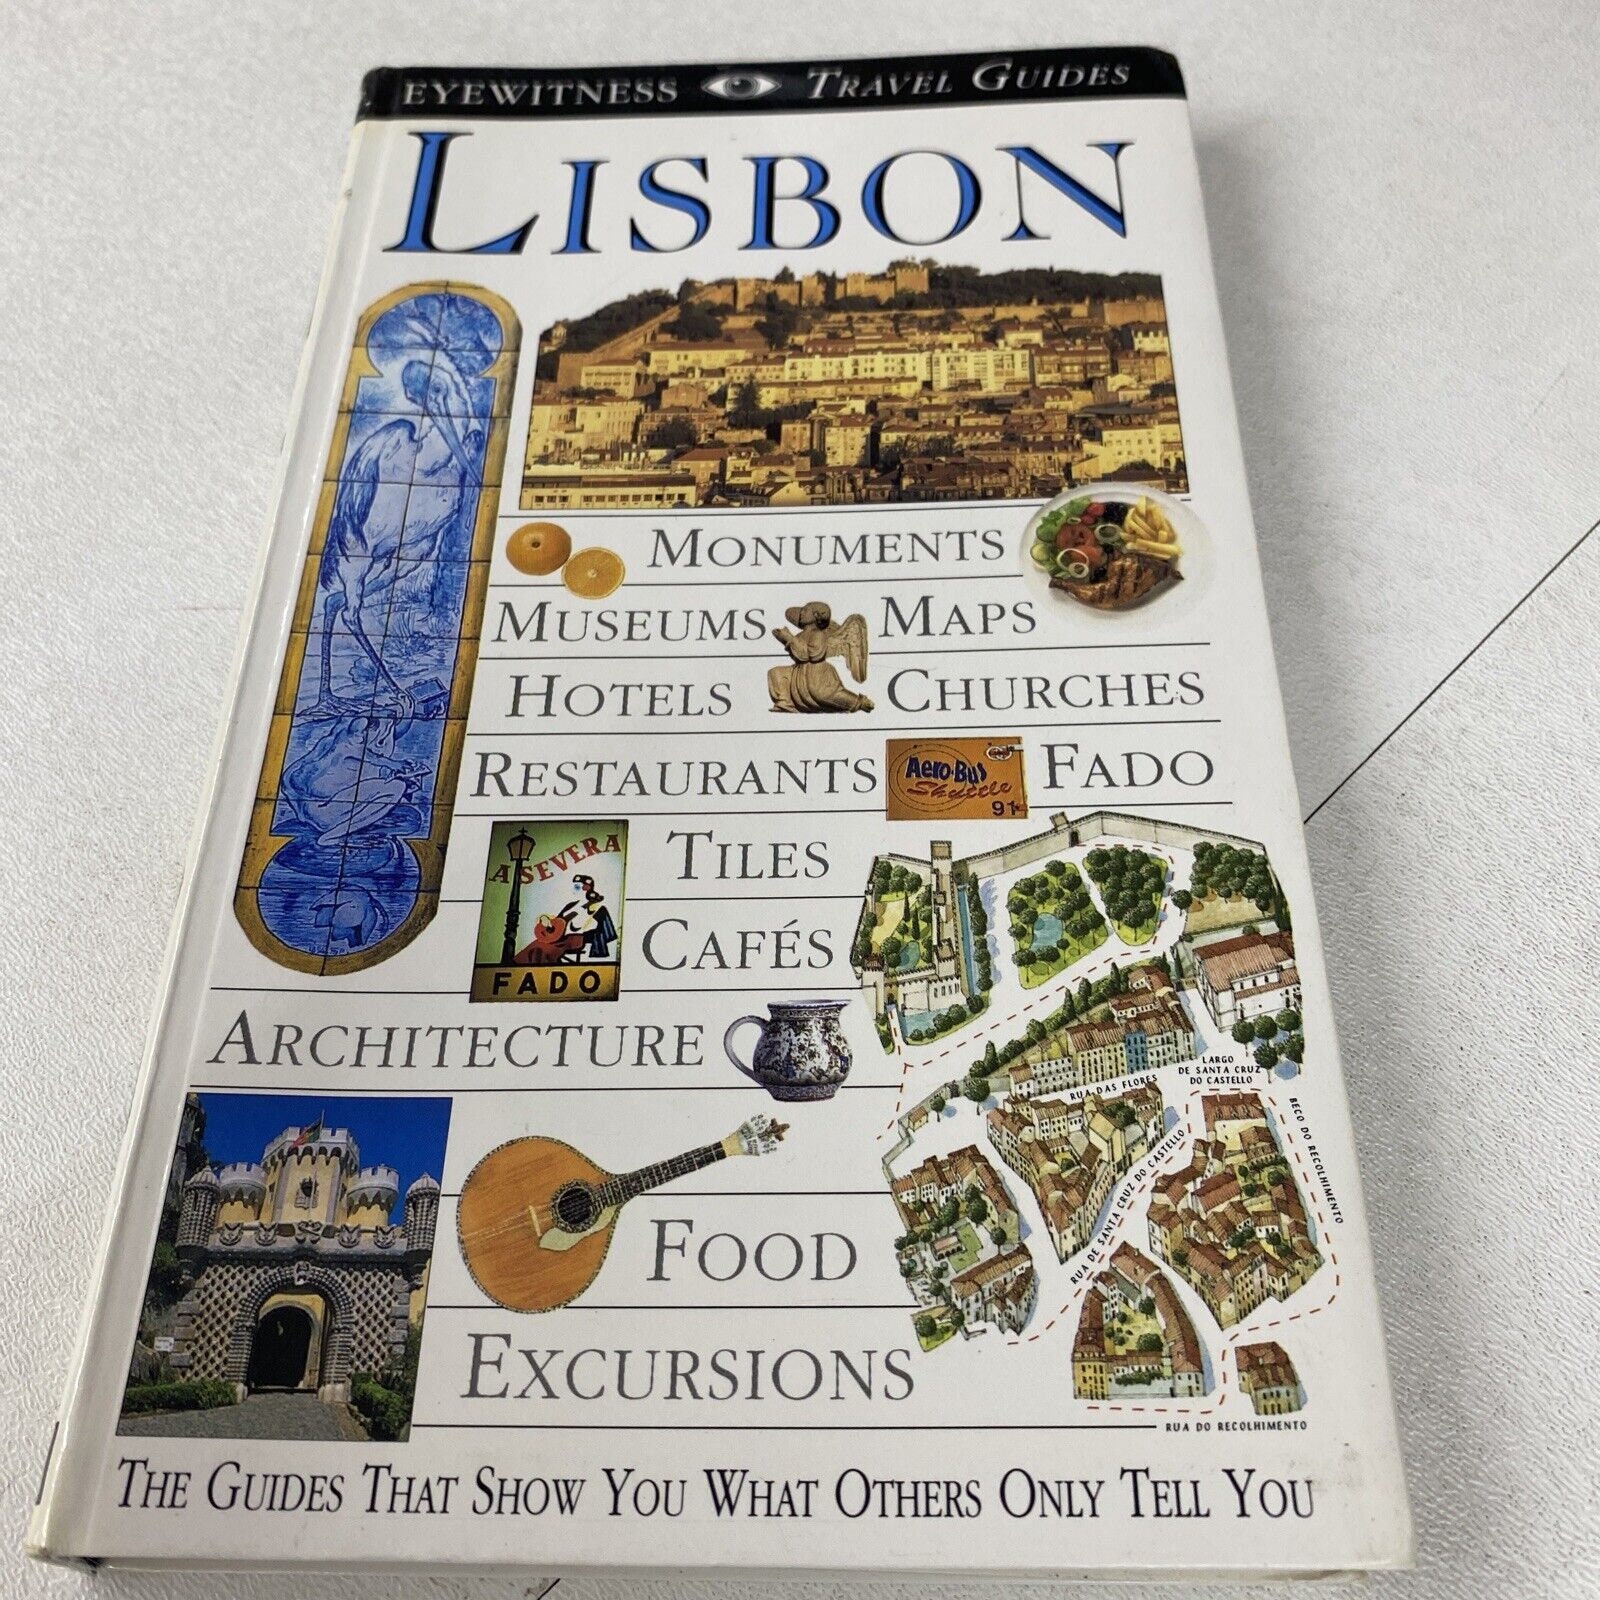 Etsy　eyewitness　Guide　Travel　Lisbon　Guides　Travel　Ireland　Eyewitness　to